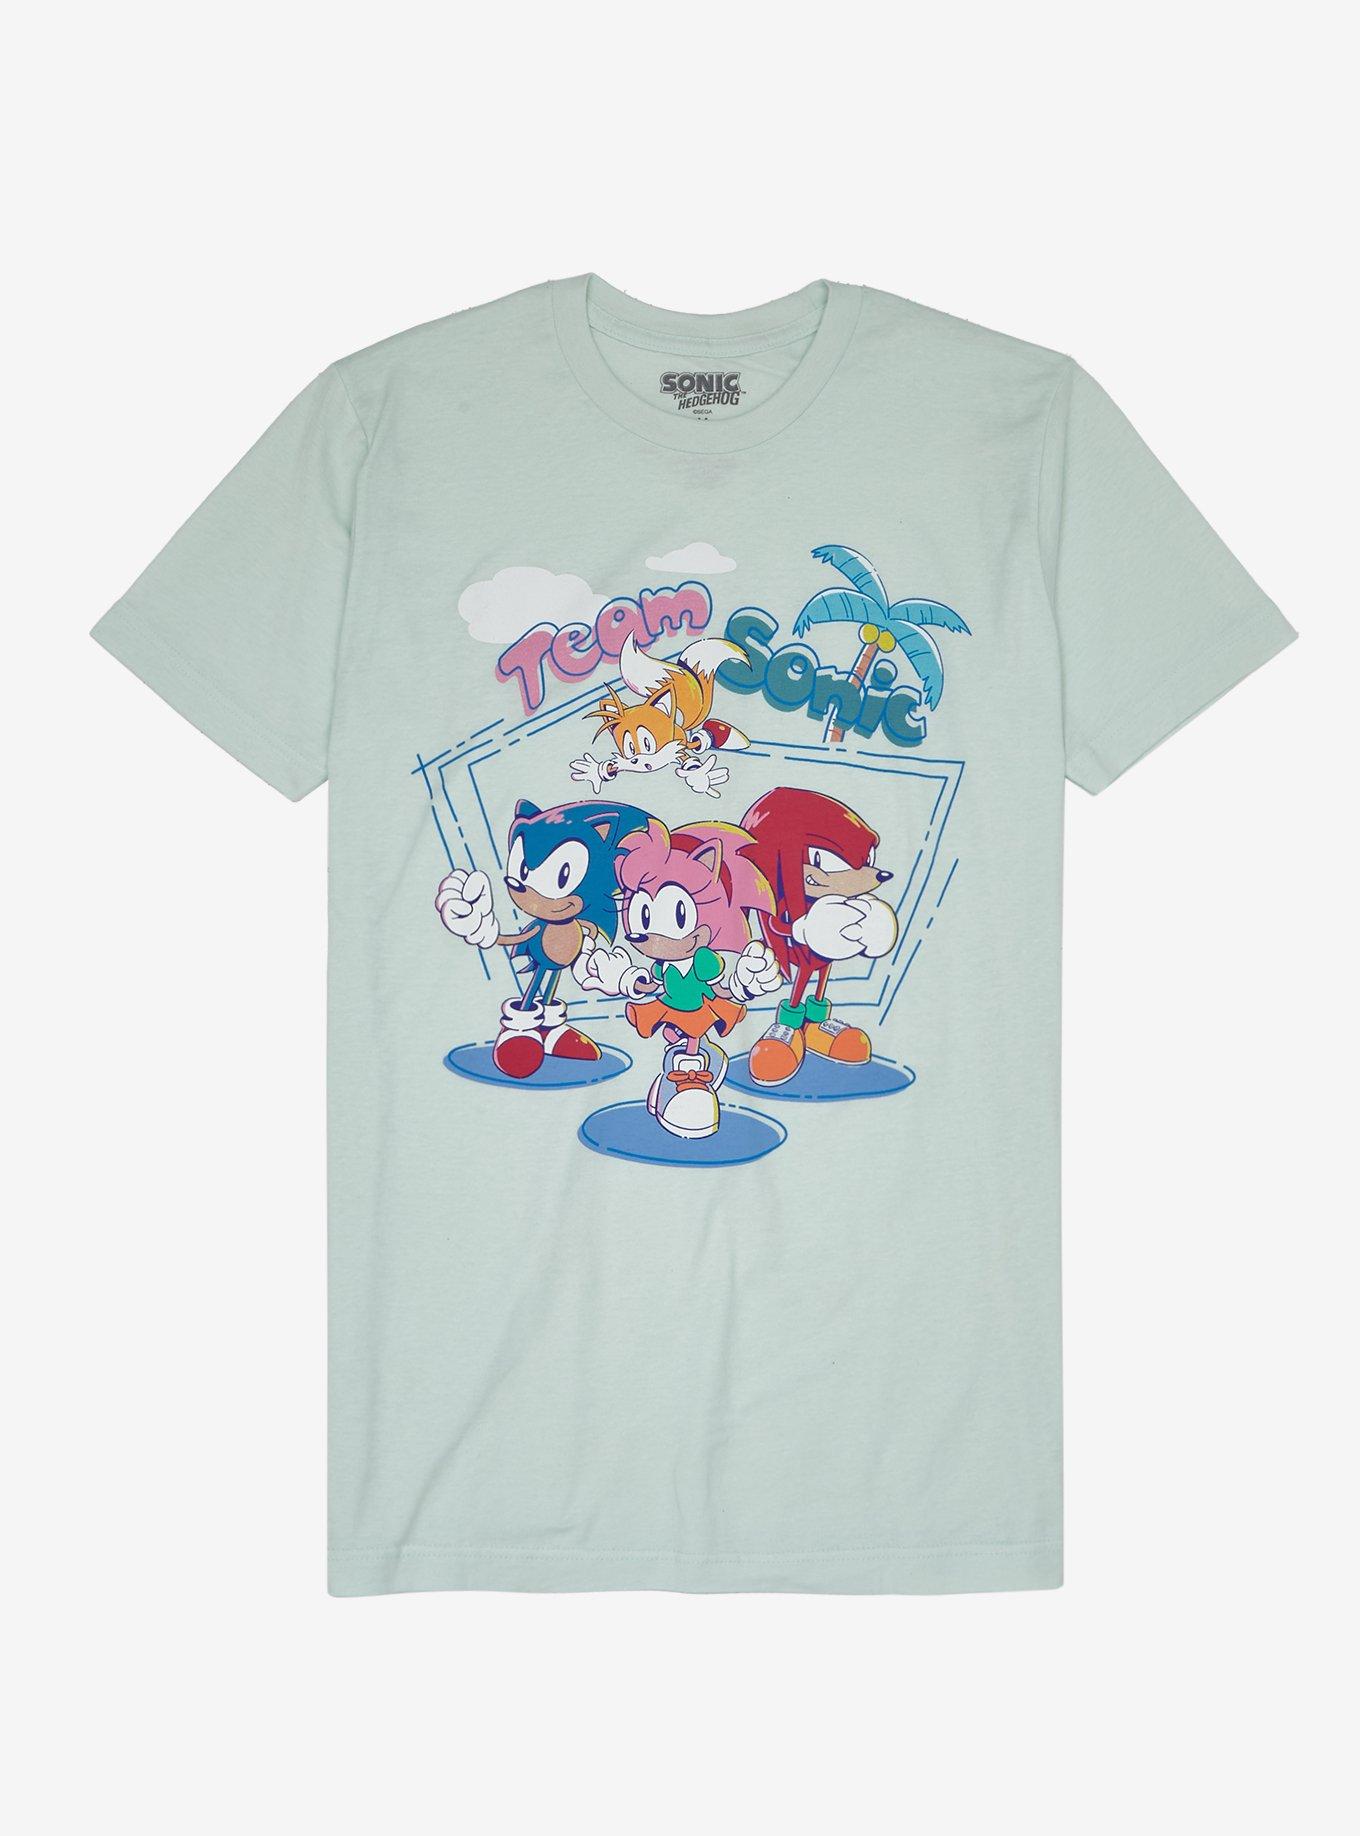  Sonic the Hedgehog Pyjamas Girls Pink Gamer T Shirt